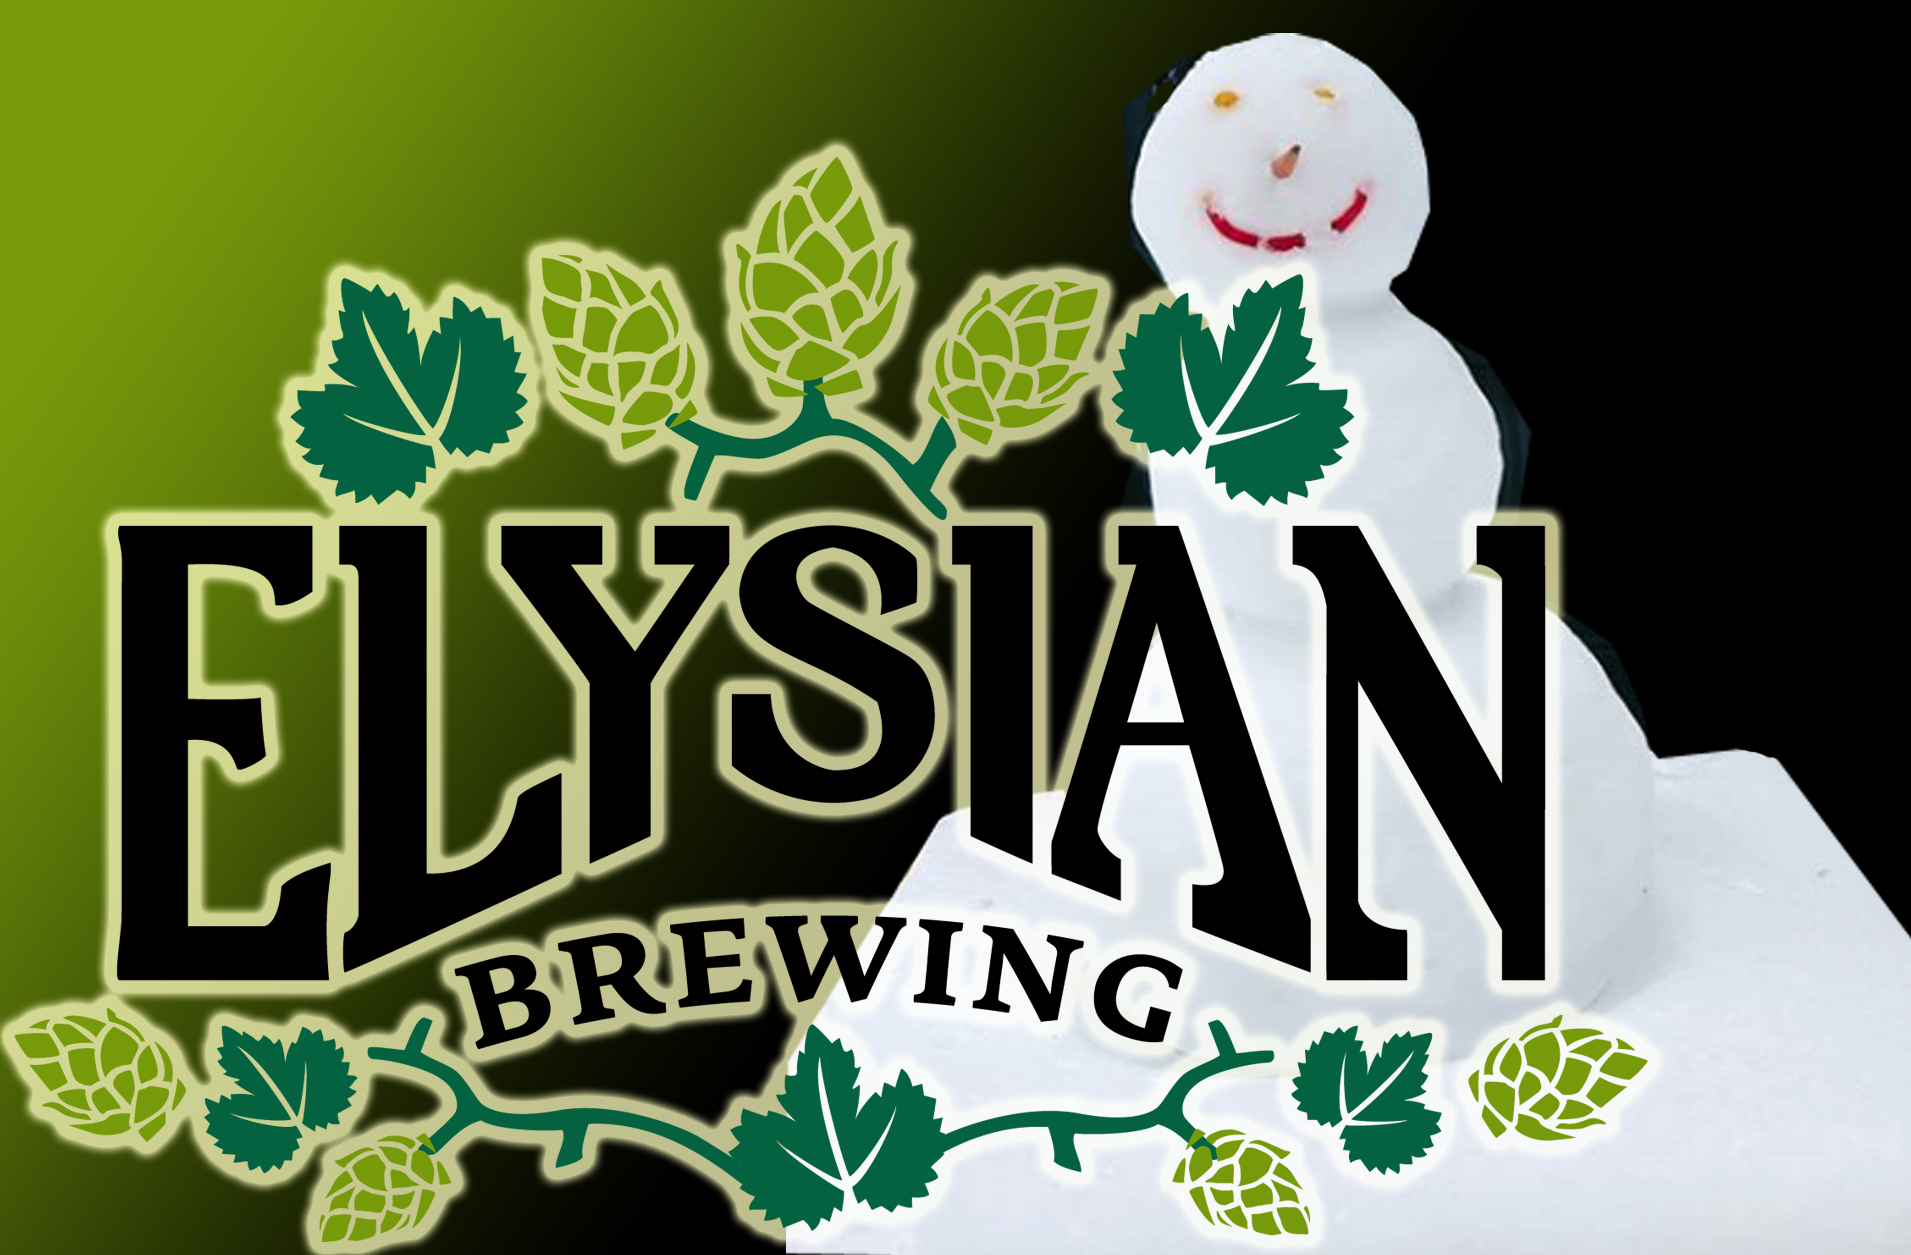 Elysian Logo with Snowman